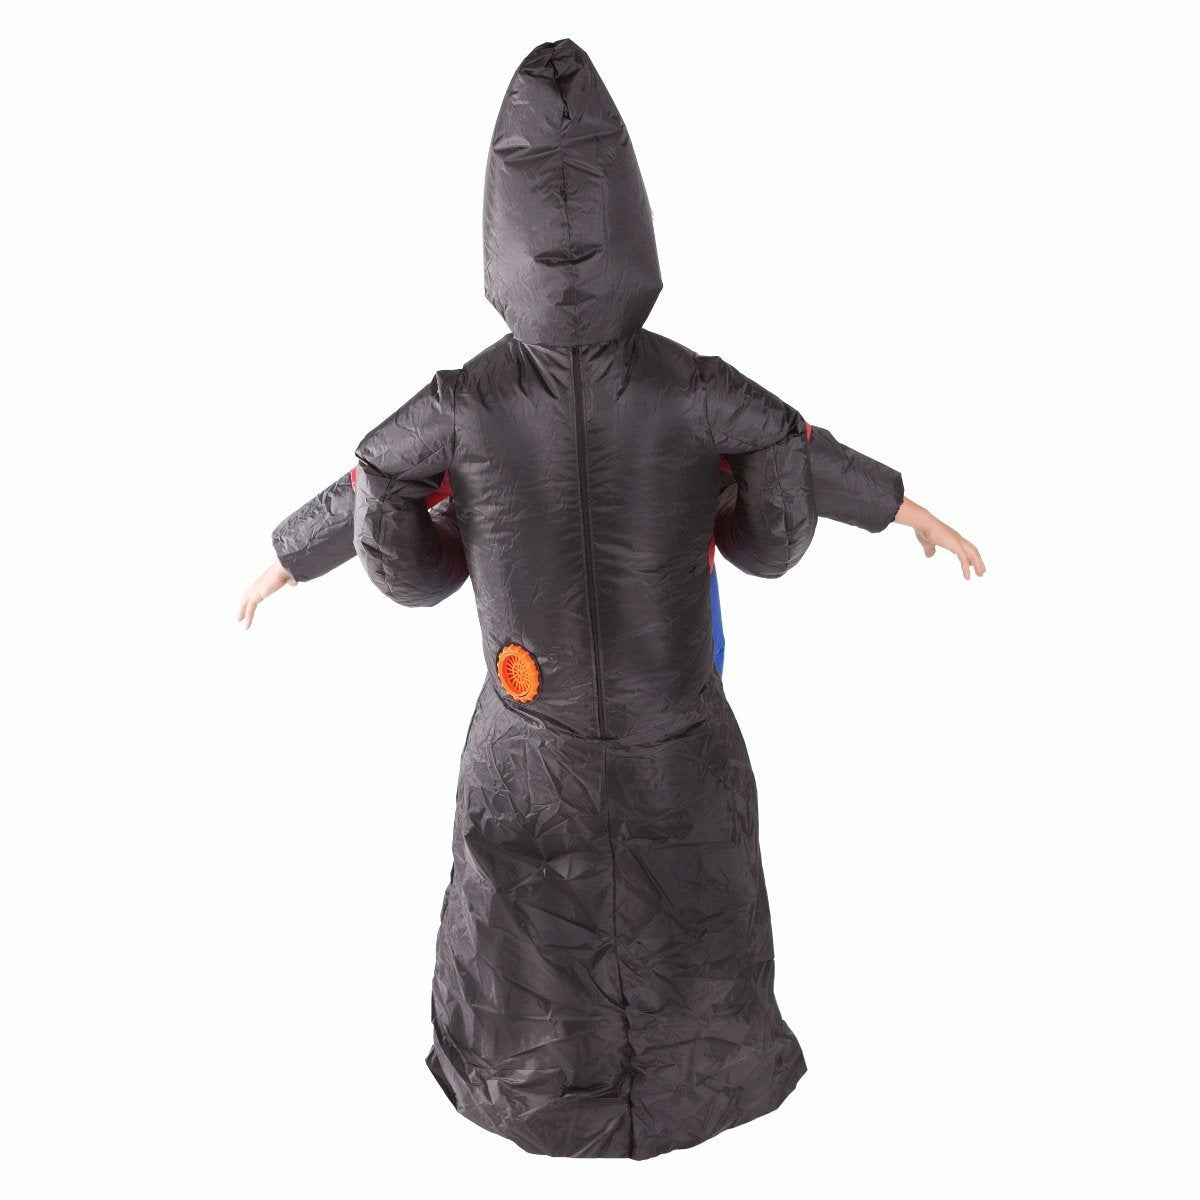 Bodysocks - Kids Inflatable Lift You Up Grim Reaper Costume